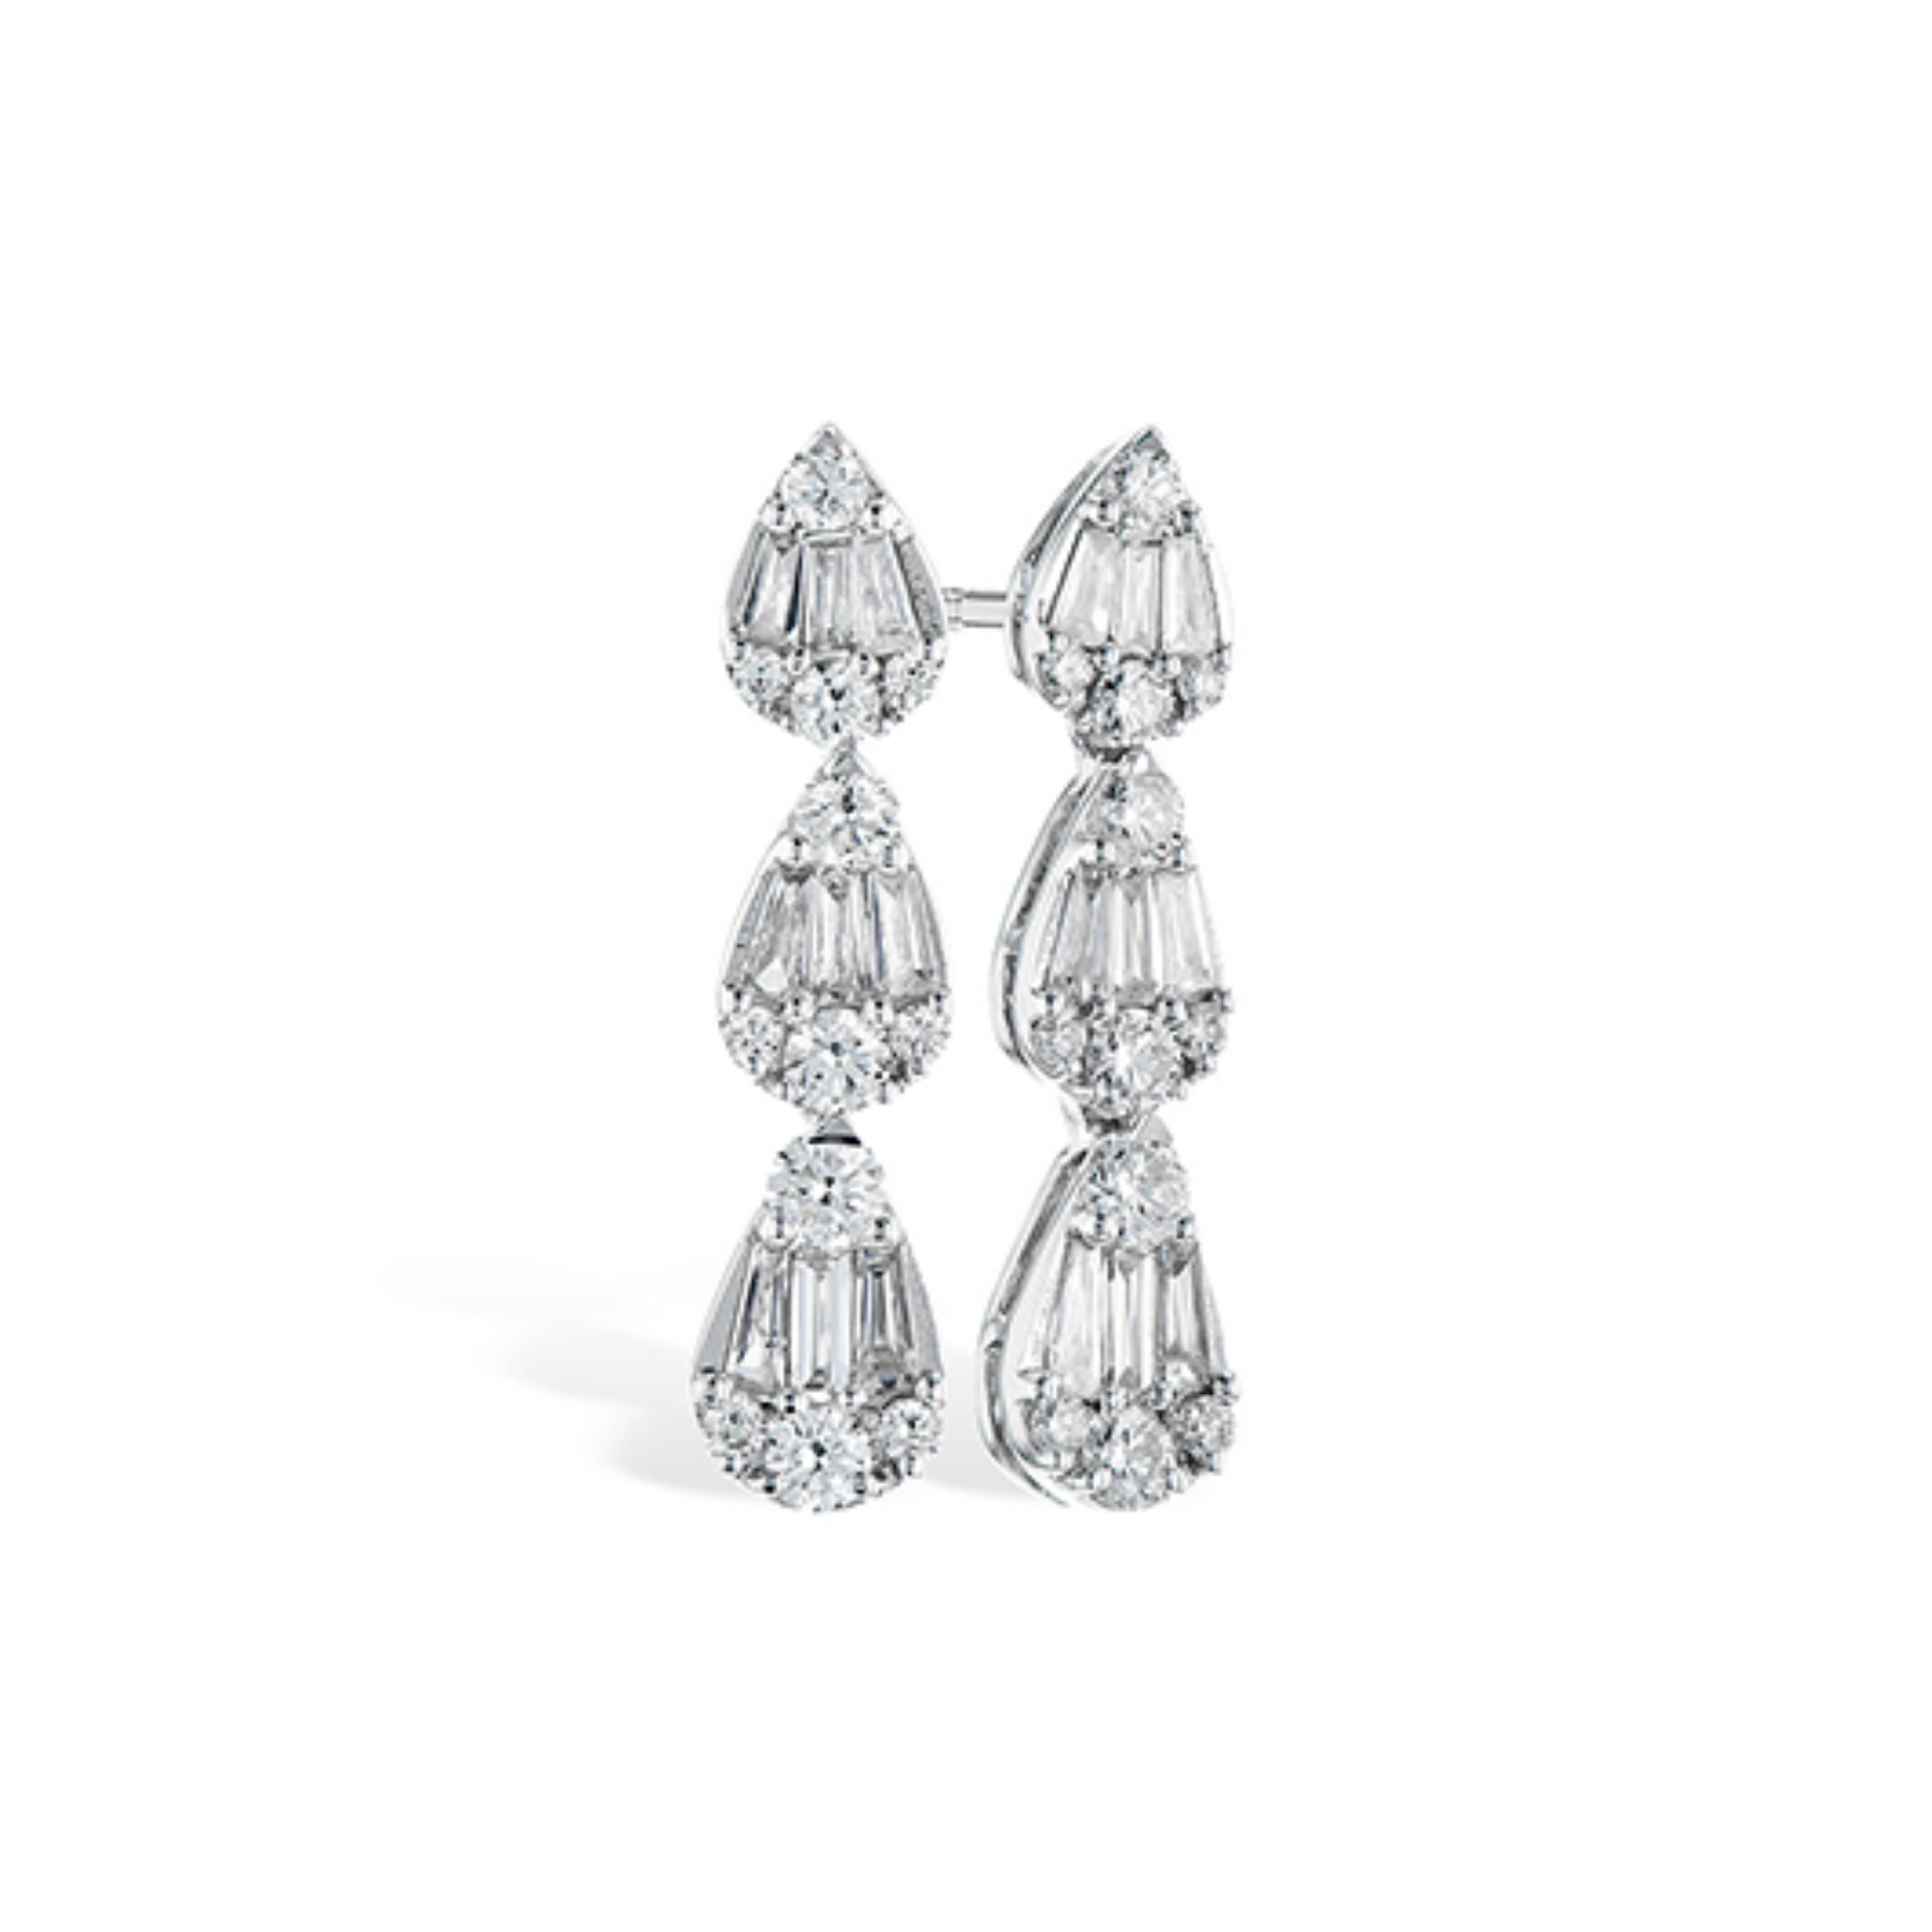 Allison Kaufman 14k White Gold and Diamond Earrings, $2,814